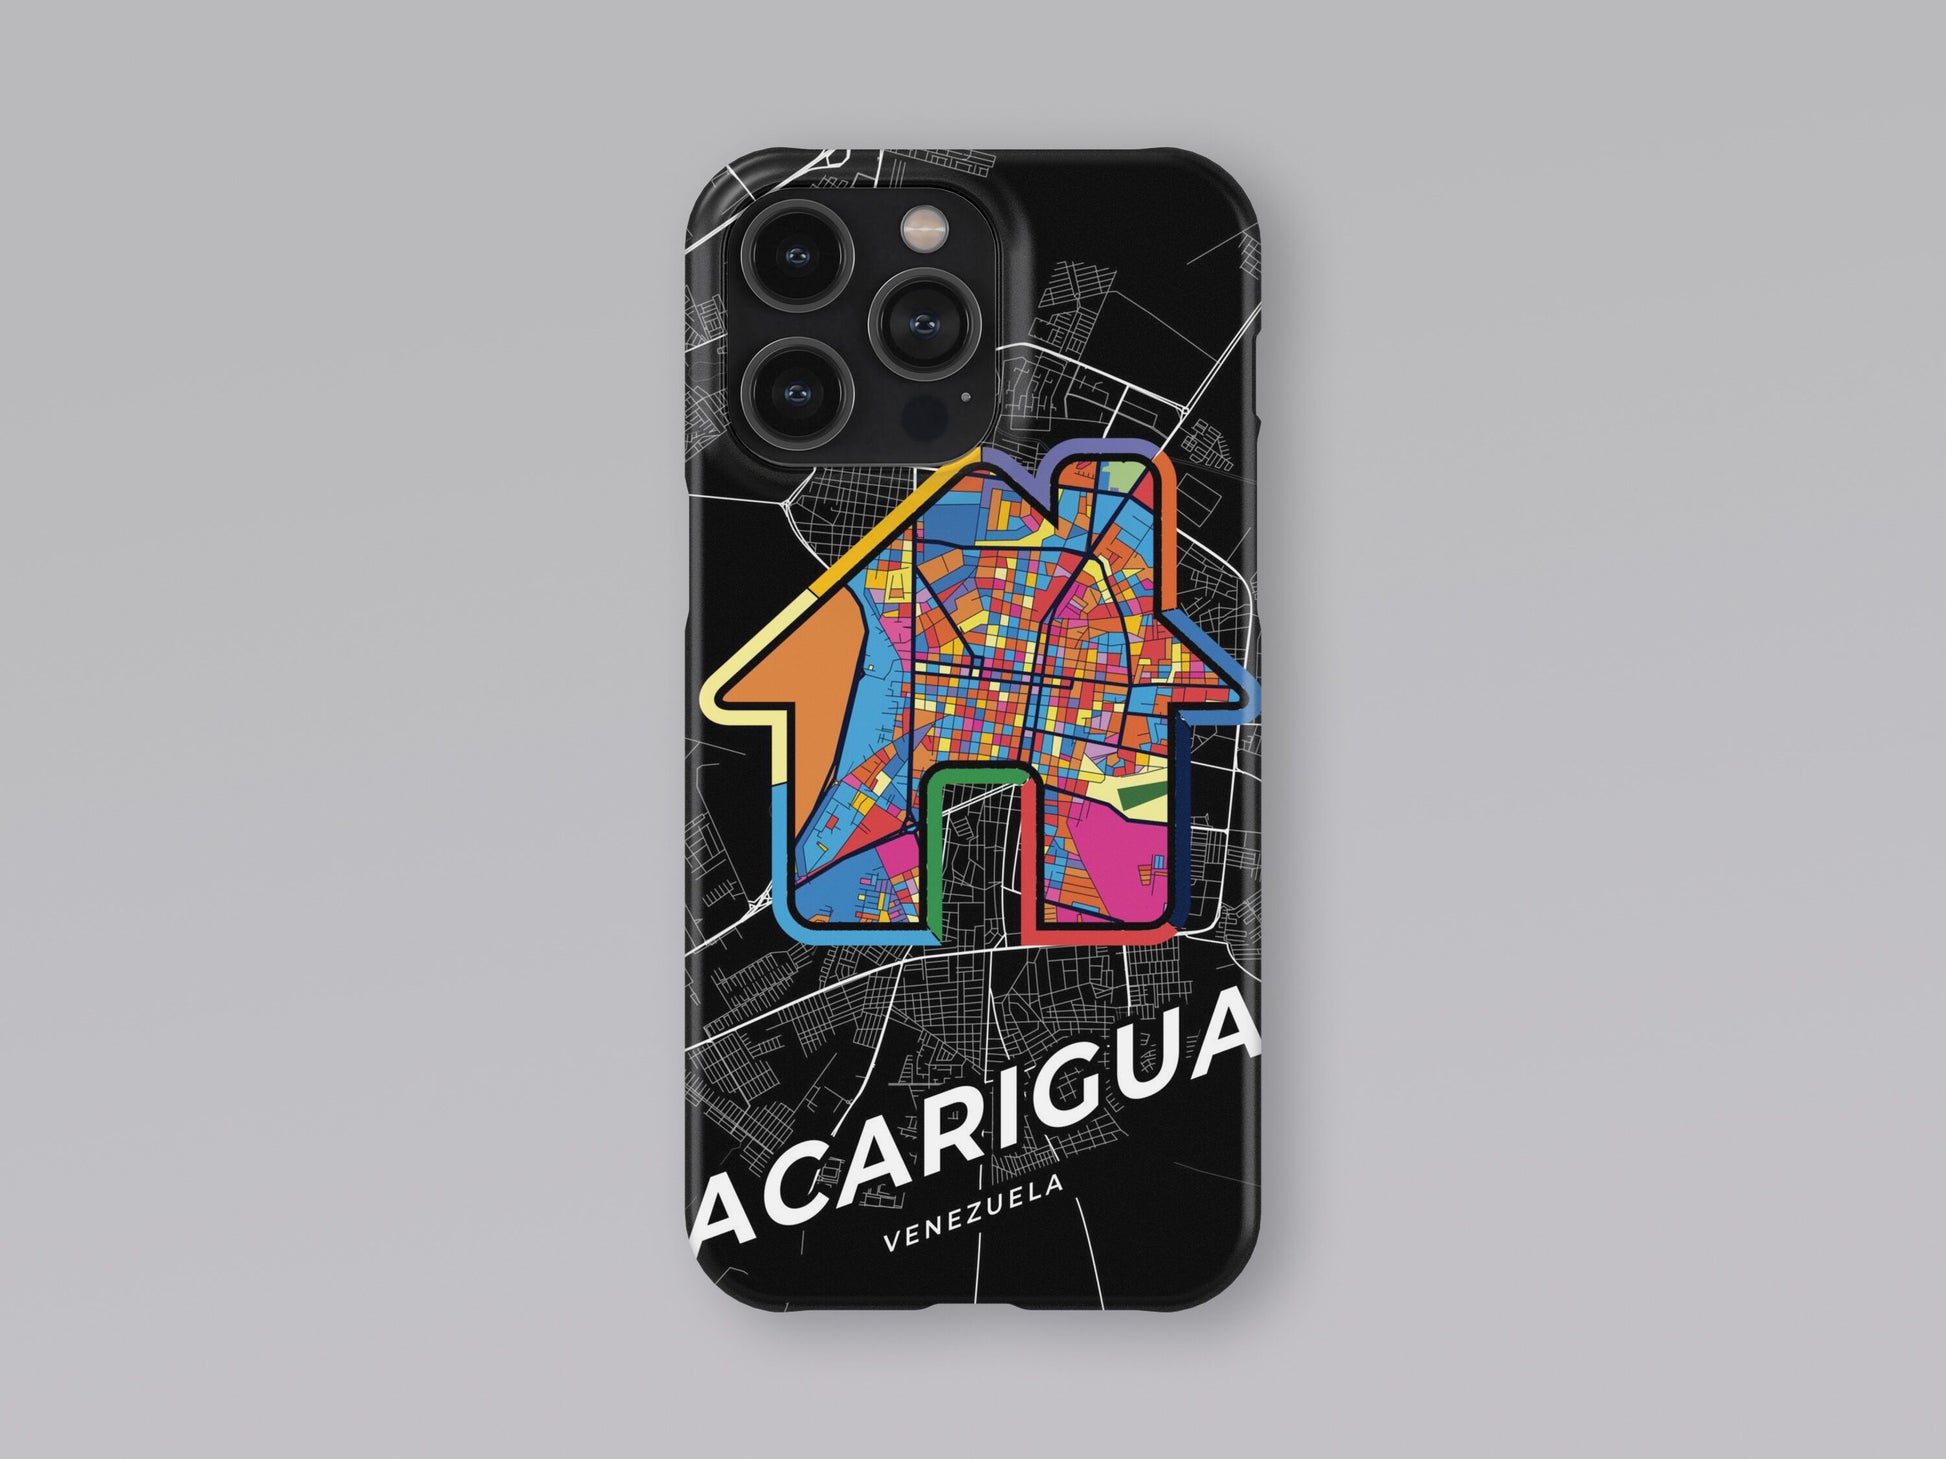 Acarigua Venezuela slim phone case with colorful icon. Birthday, wedding or housewarming gift. Couple match cases. 3